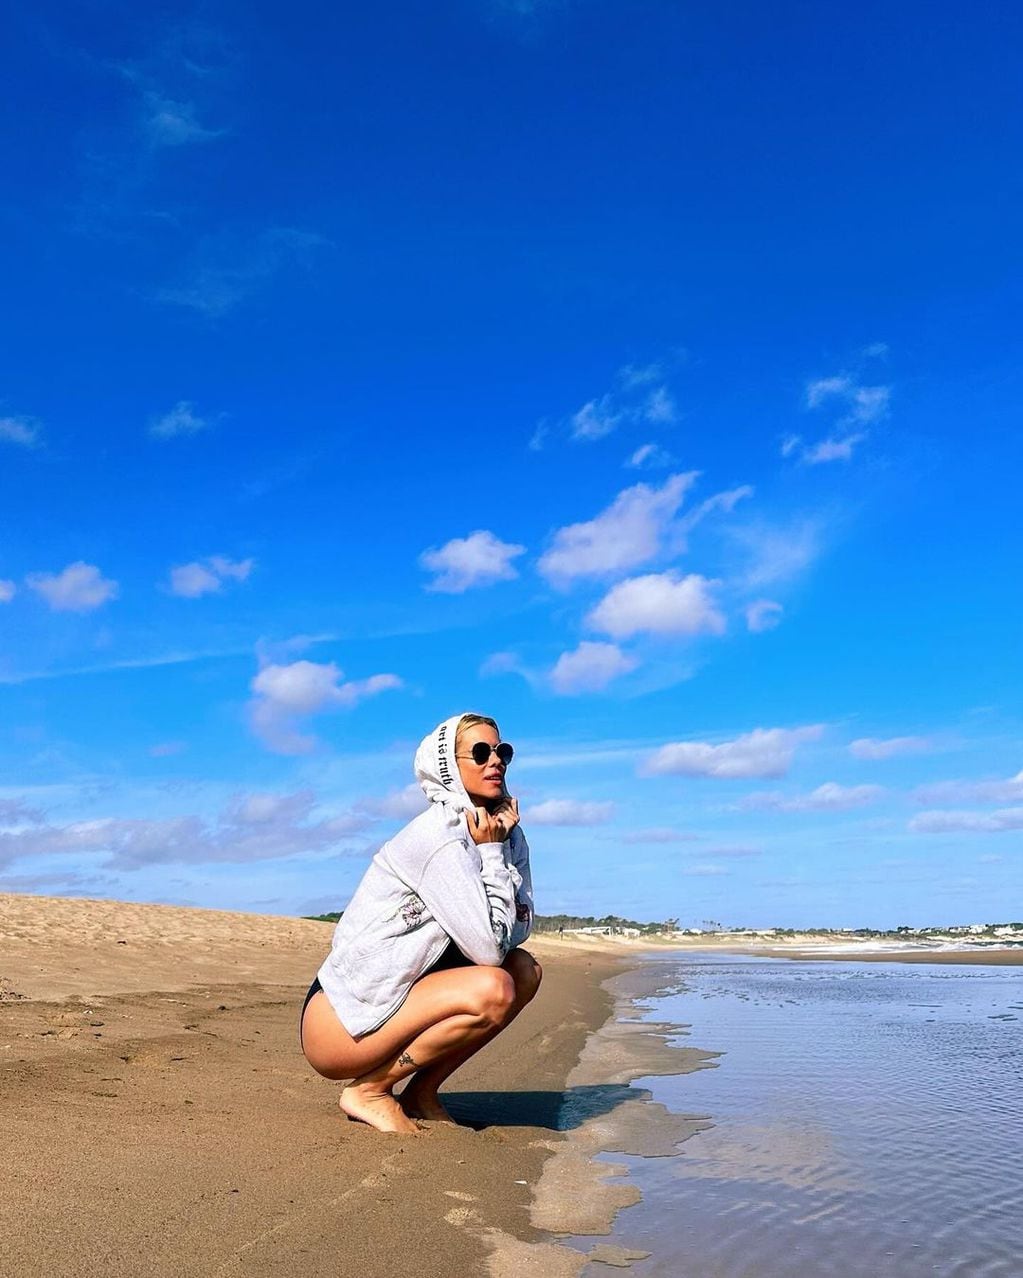 Nicole Neumann desde la playa. / Instagram